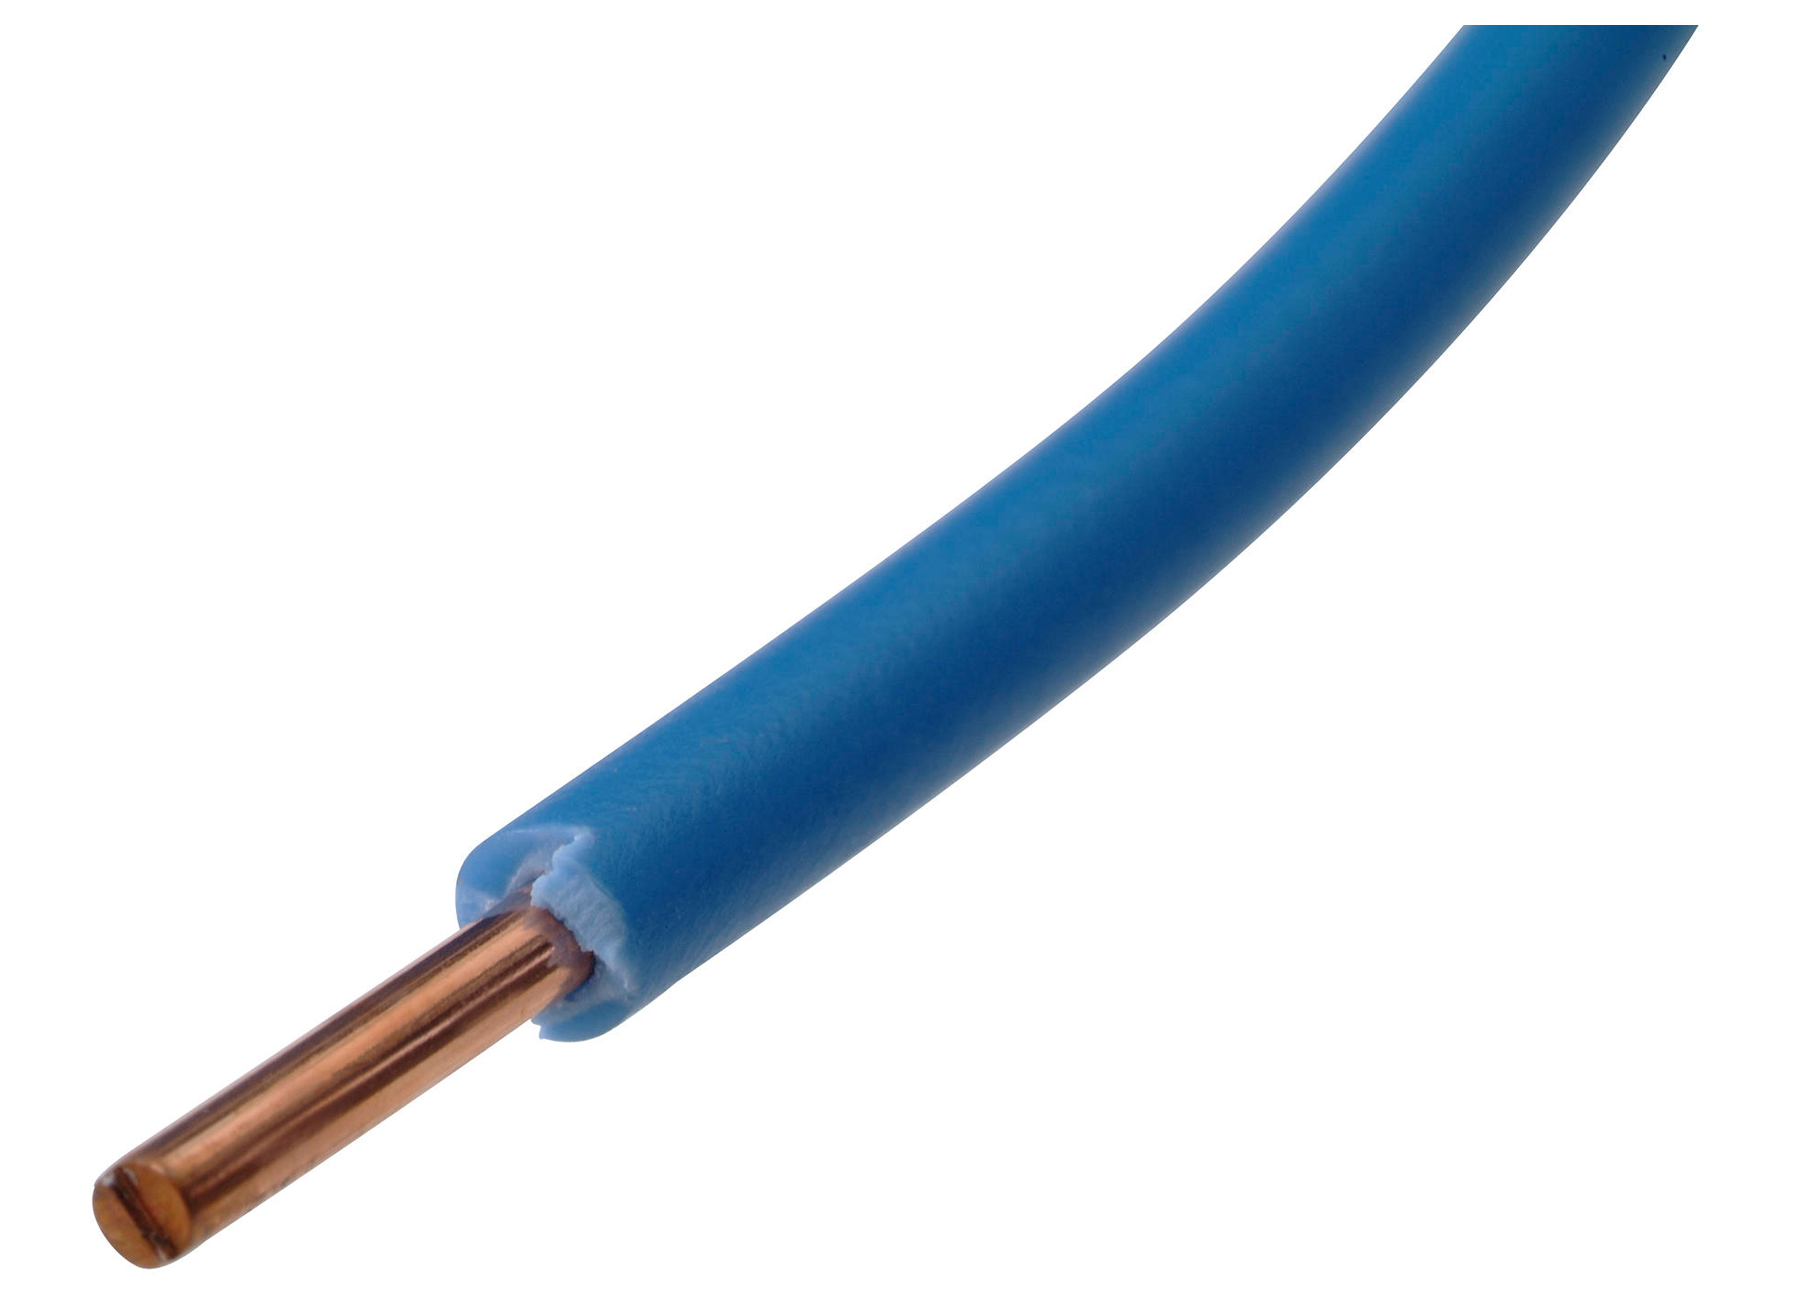 Vob-kabel 2.5mm2 Blauw 100m - elektriciteit kabel draad - kabel - kabel vrac - kabel 25mm2 blauw 100m